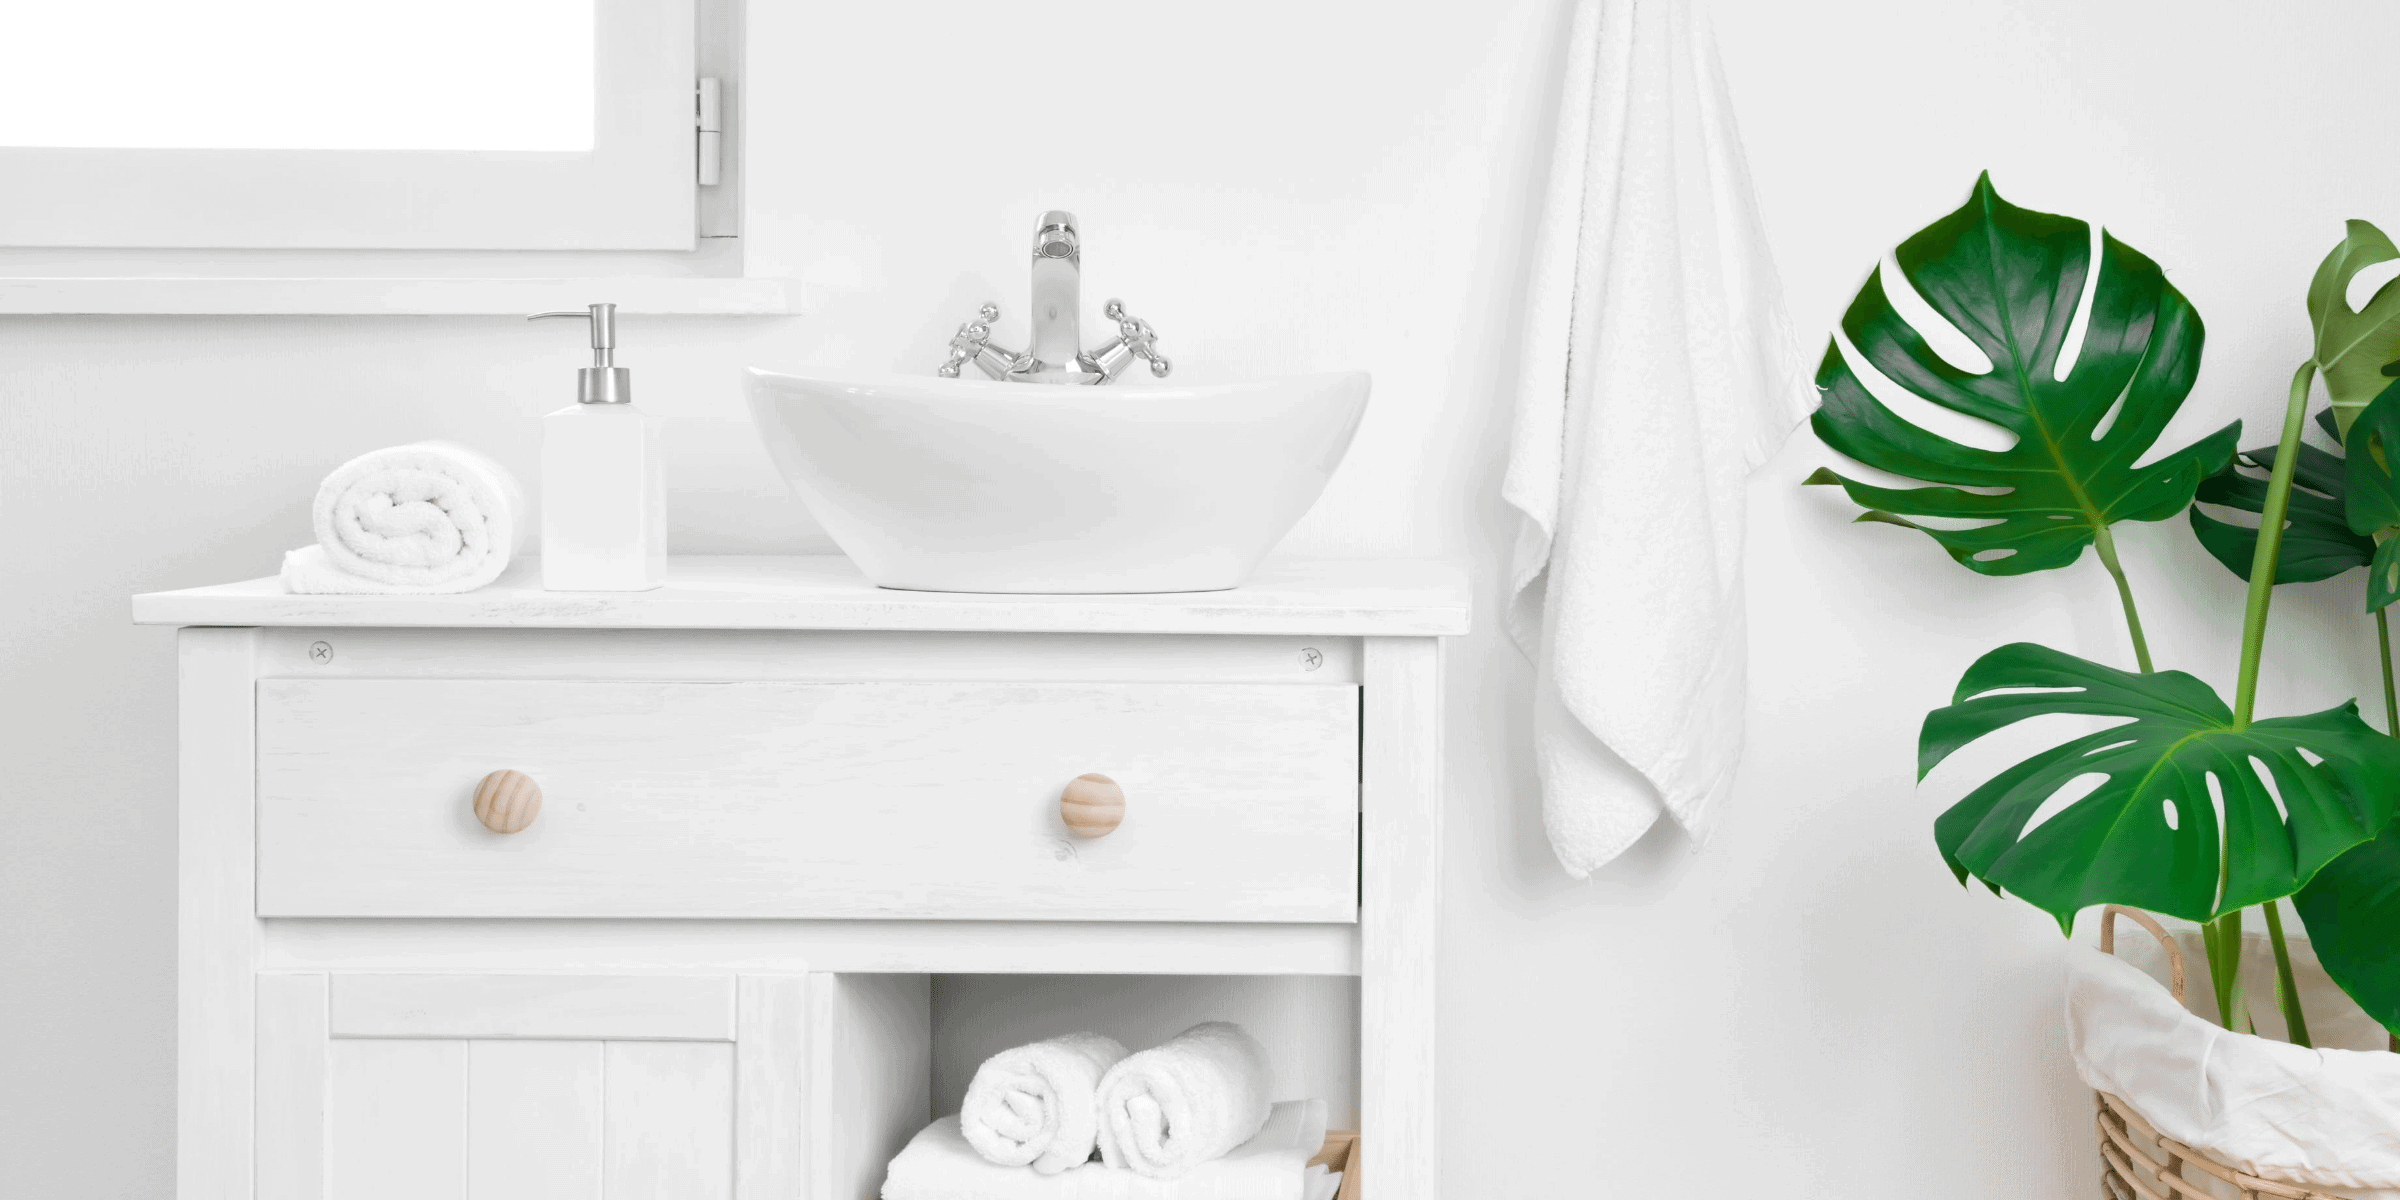 6 Ways to Create More Bathroom Storage